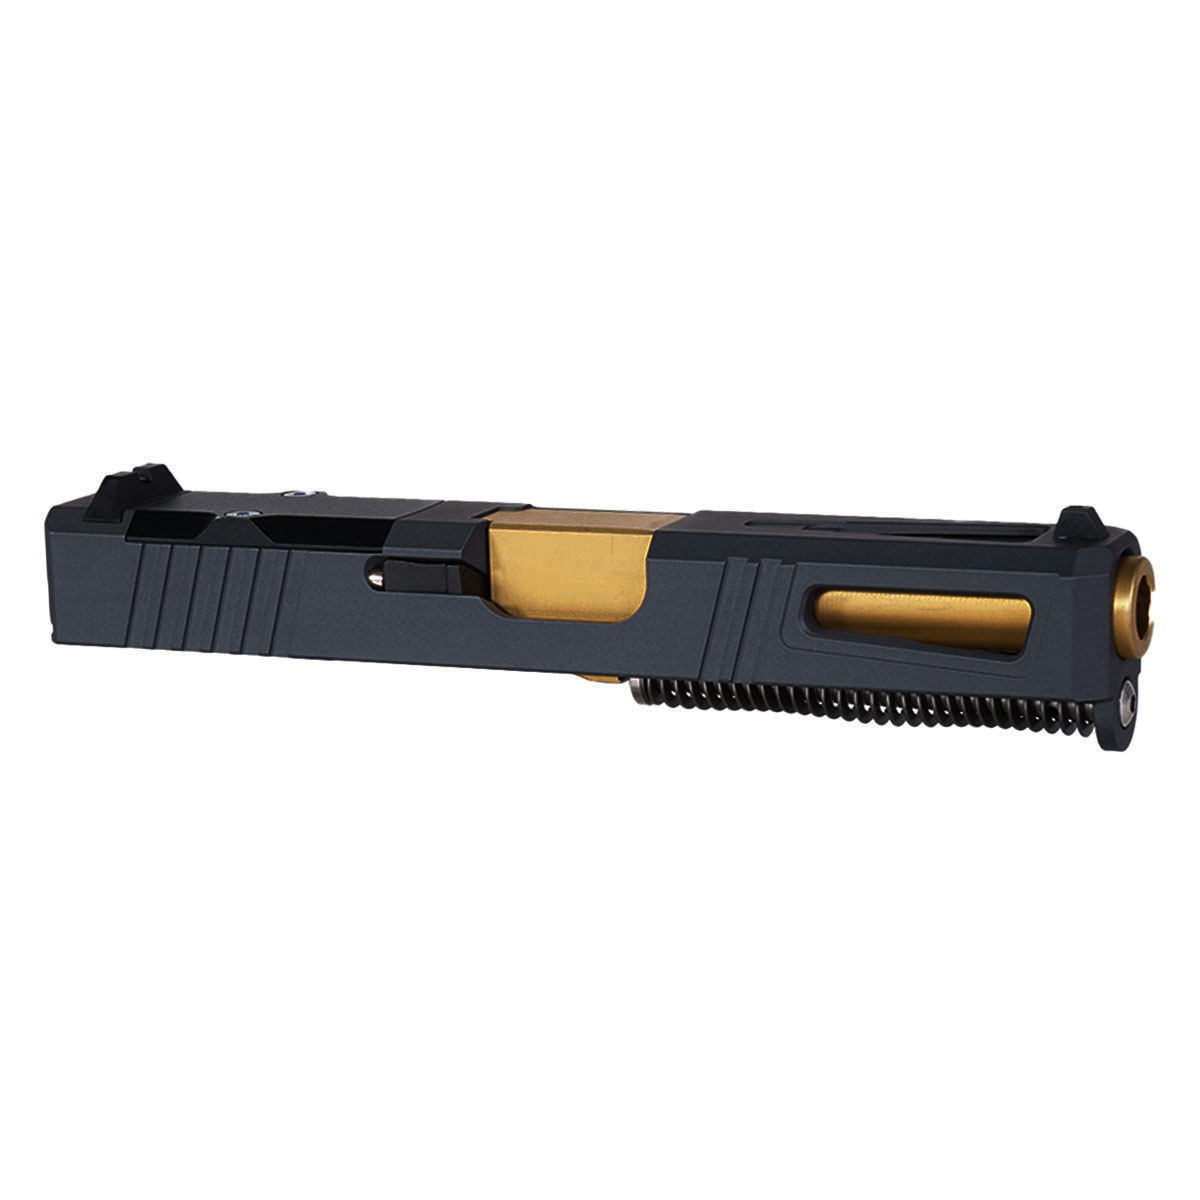 DDS 'The Juno' 9mm Complete Slide Kit - Glock 19 Gen 1-3 Compatible